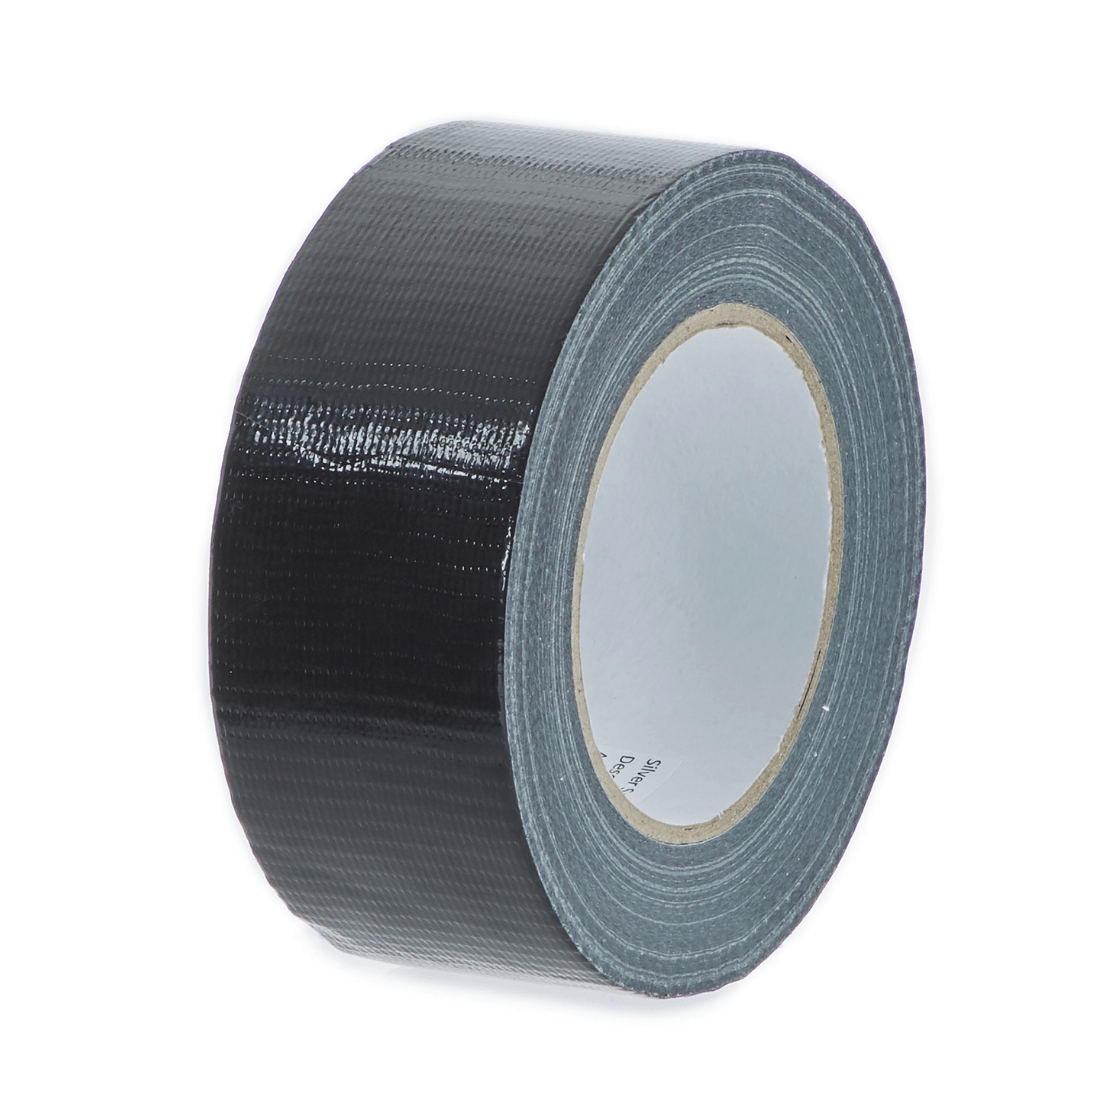 InsulationUK Tape 48mm x 45m Black Cloth Tape IUK01777